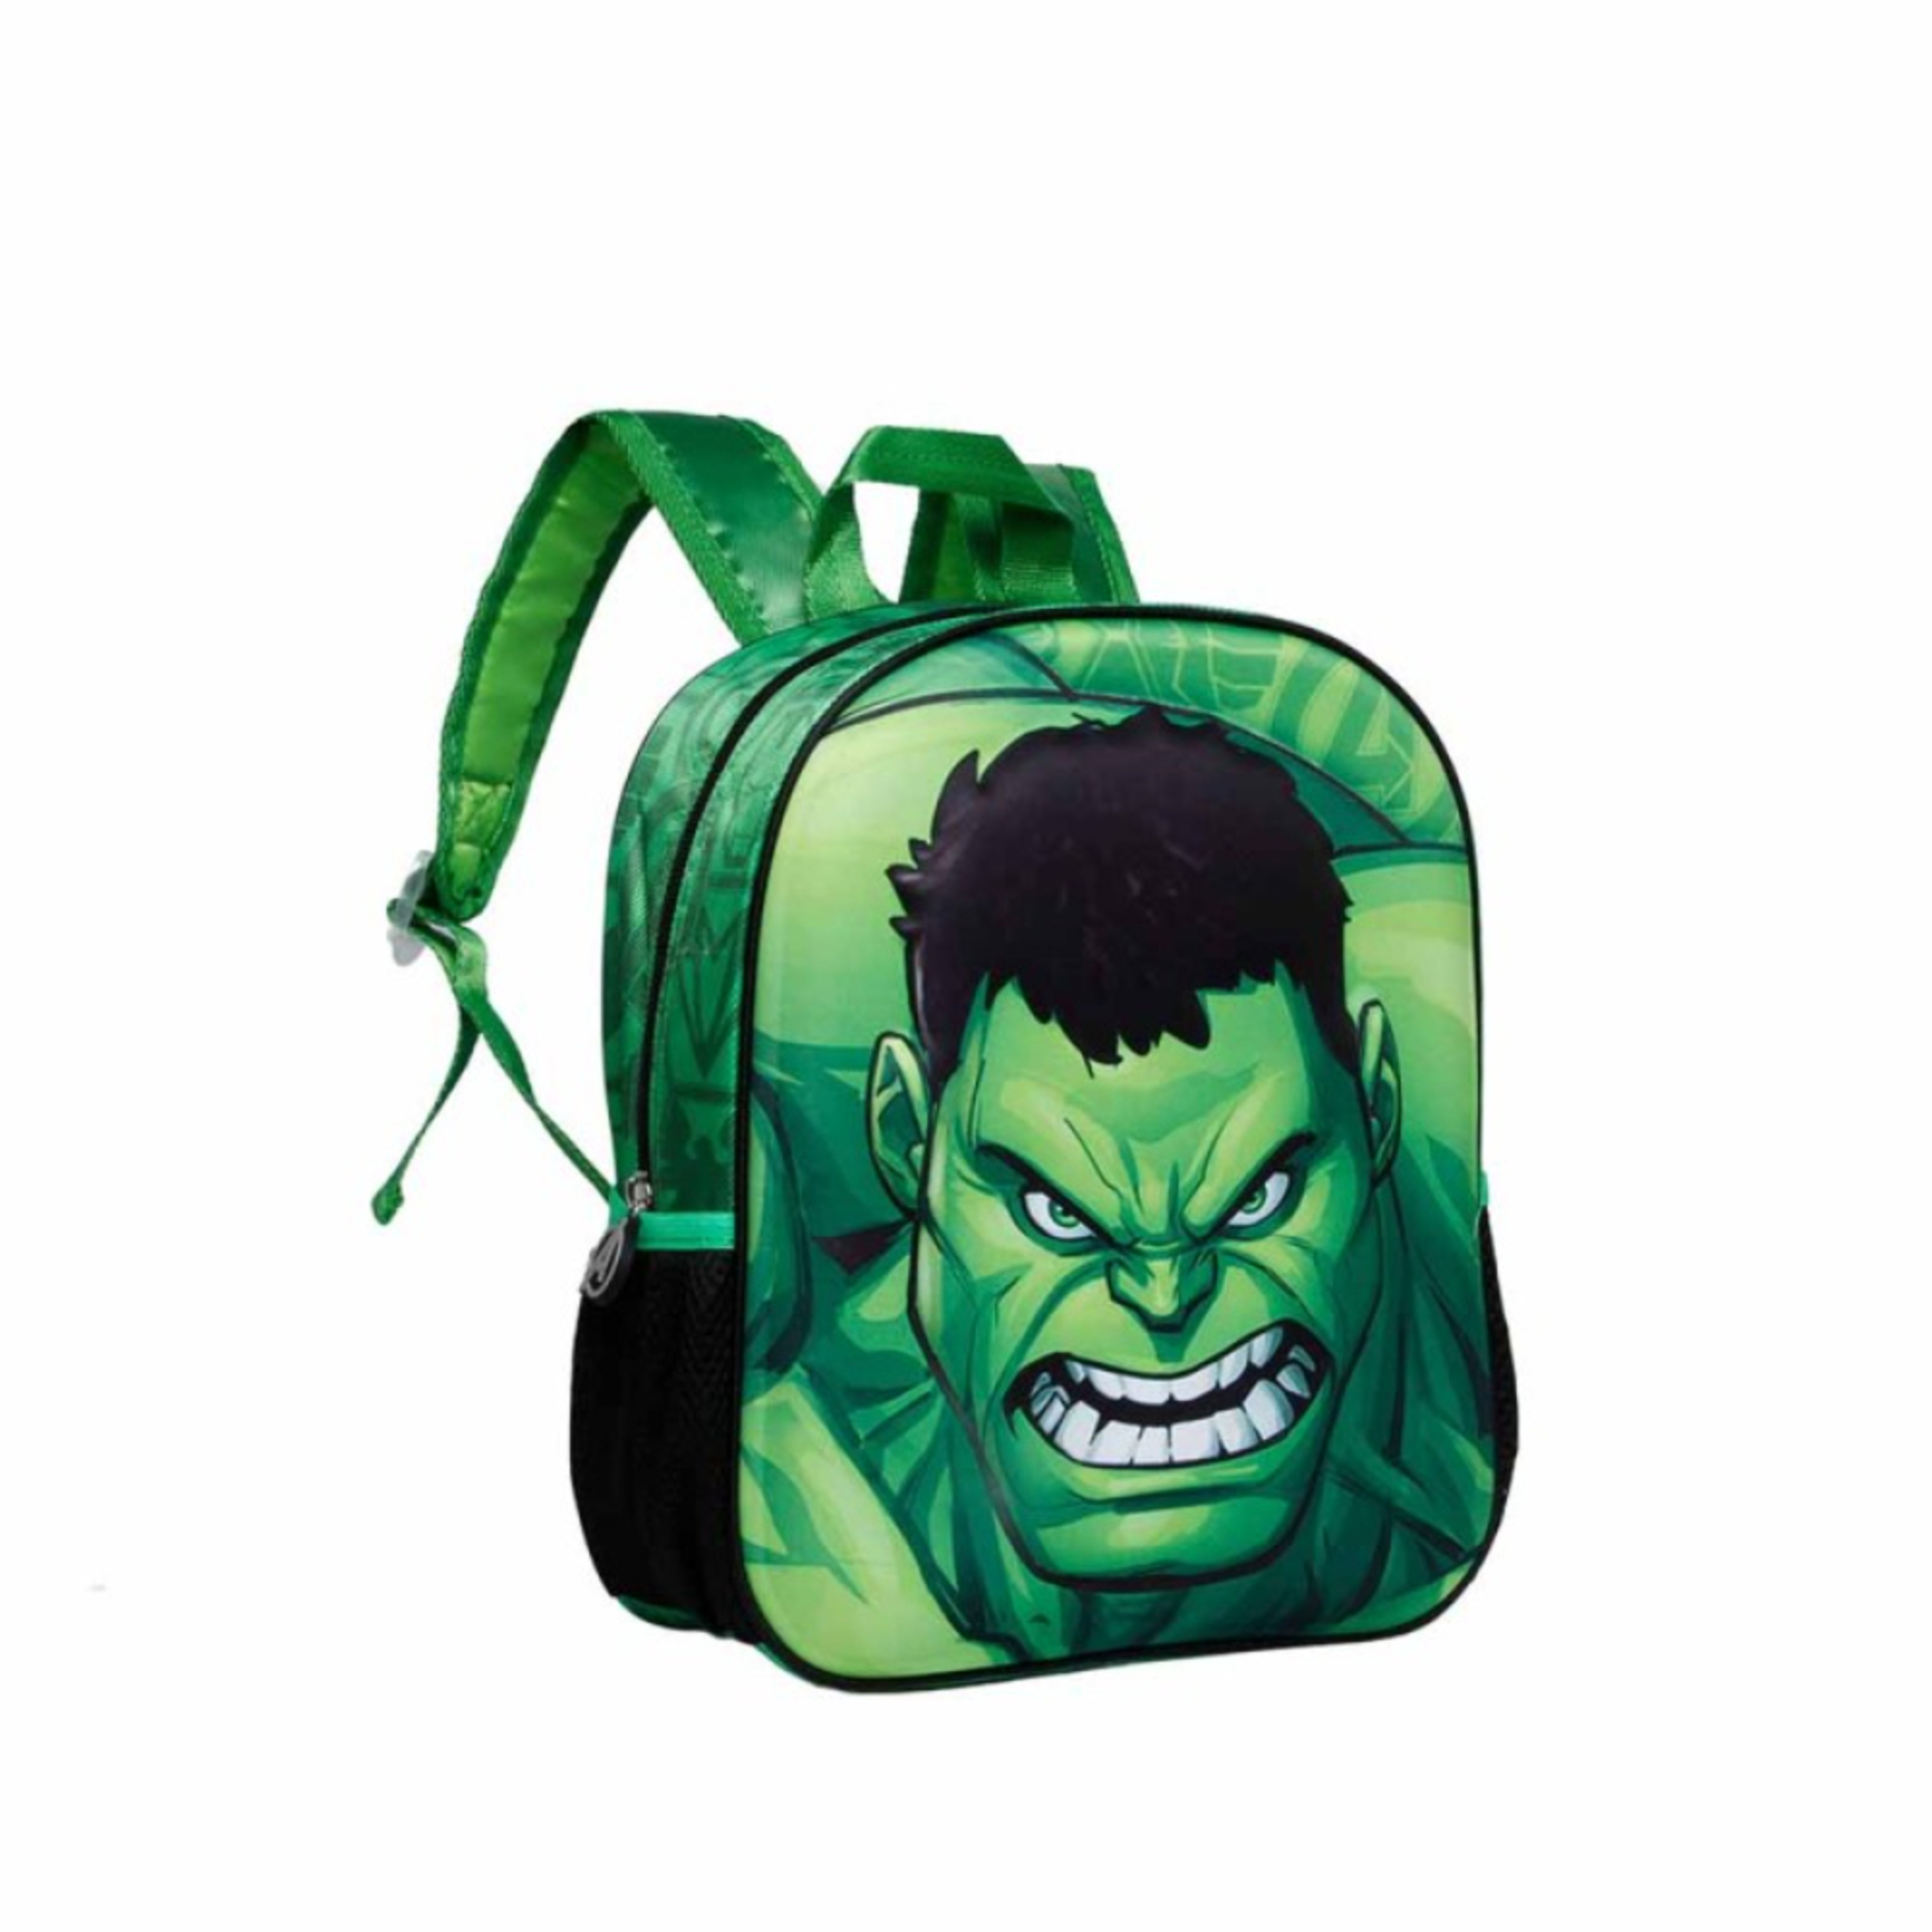 Mochila Hulk 71414 - verde - 